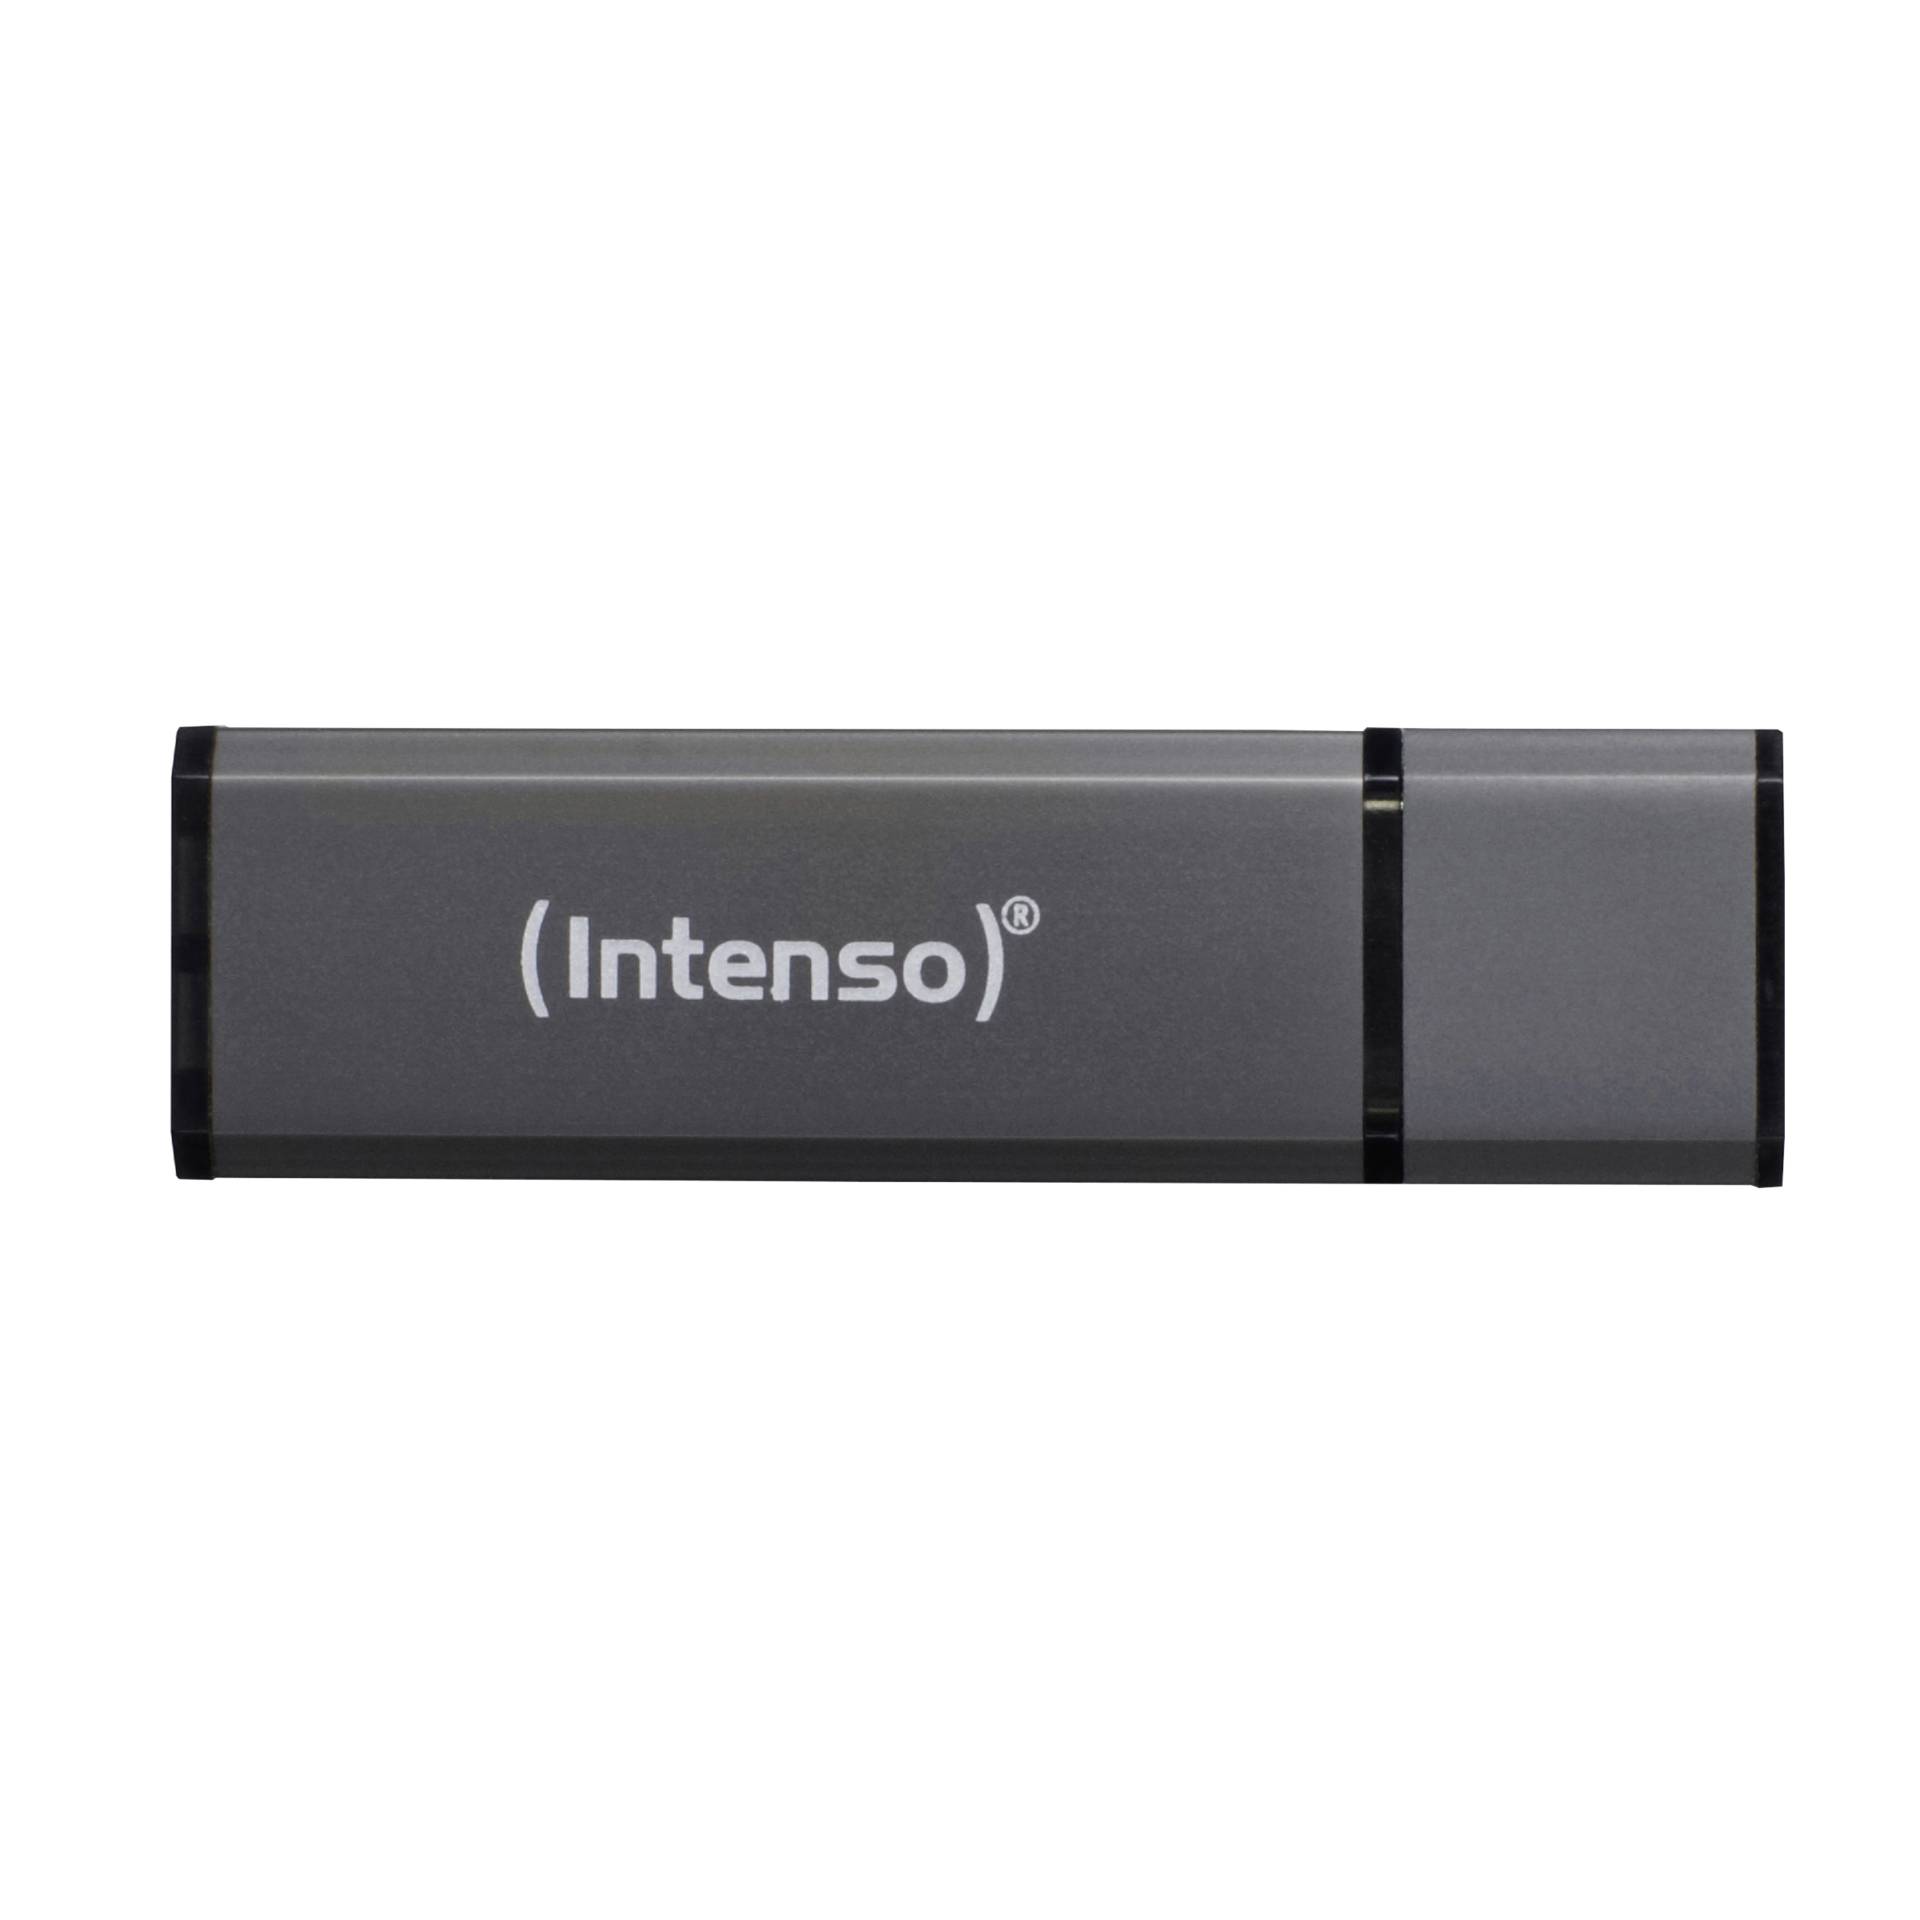 32 GB Intenso 2.0 Alu Line USB 2.0 Stick Anthrazit lesen: 28MB/s, schreiben: 6.5MB/s